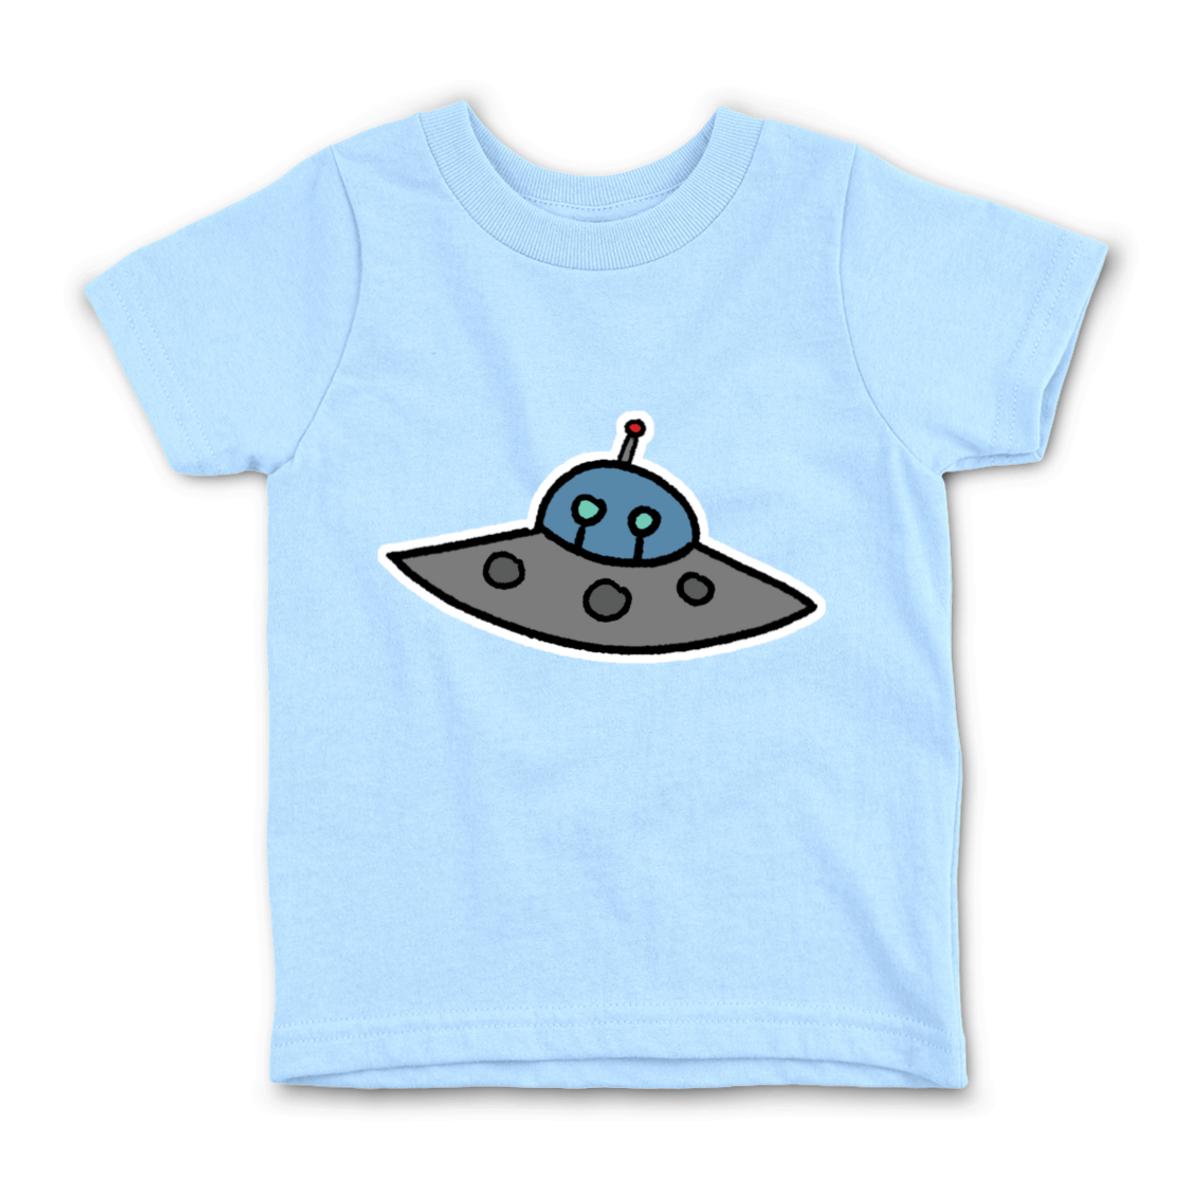 Flying Saucer Kid's Tee Small light-blue